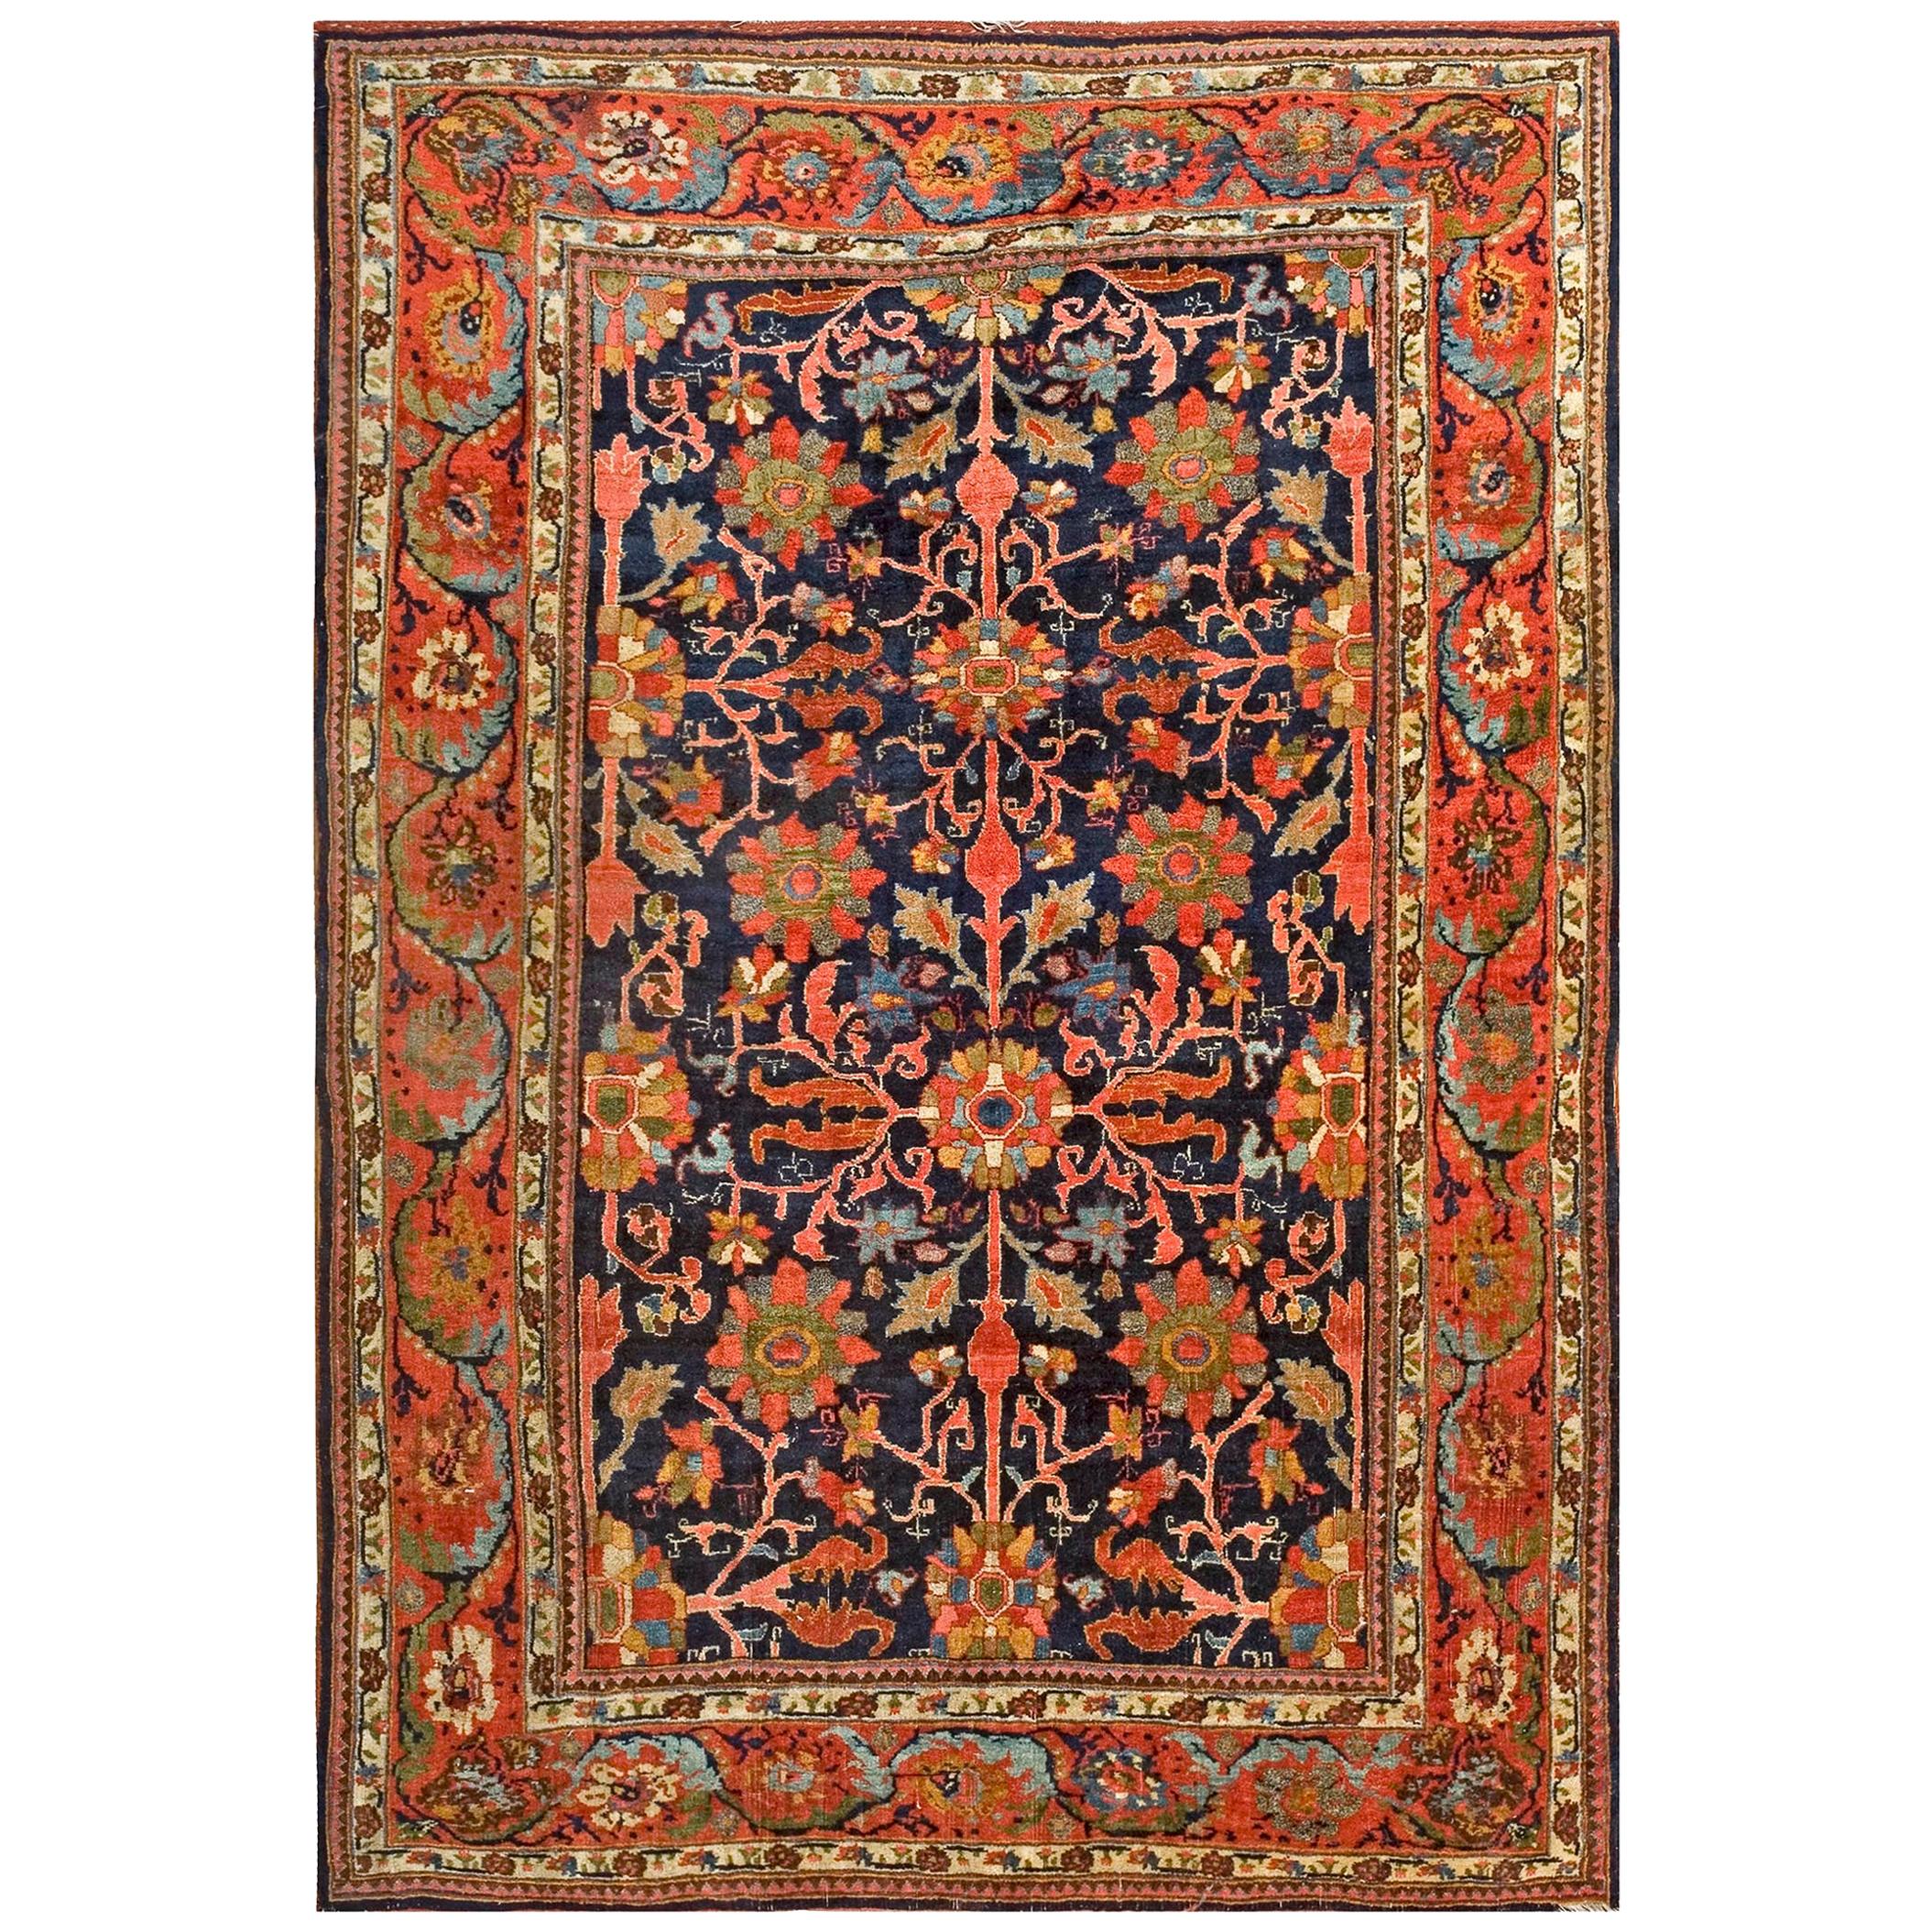 Early 20th Century W. Persian Bijar Carpet ( 4'6" x 6'6" - 137 x 198 ) For Sale